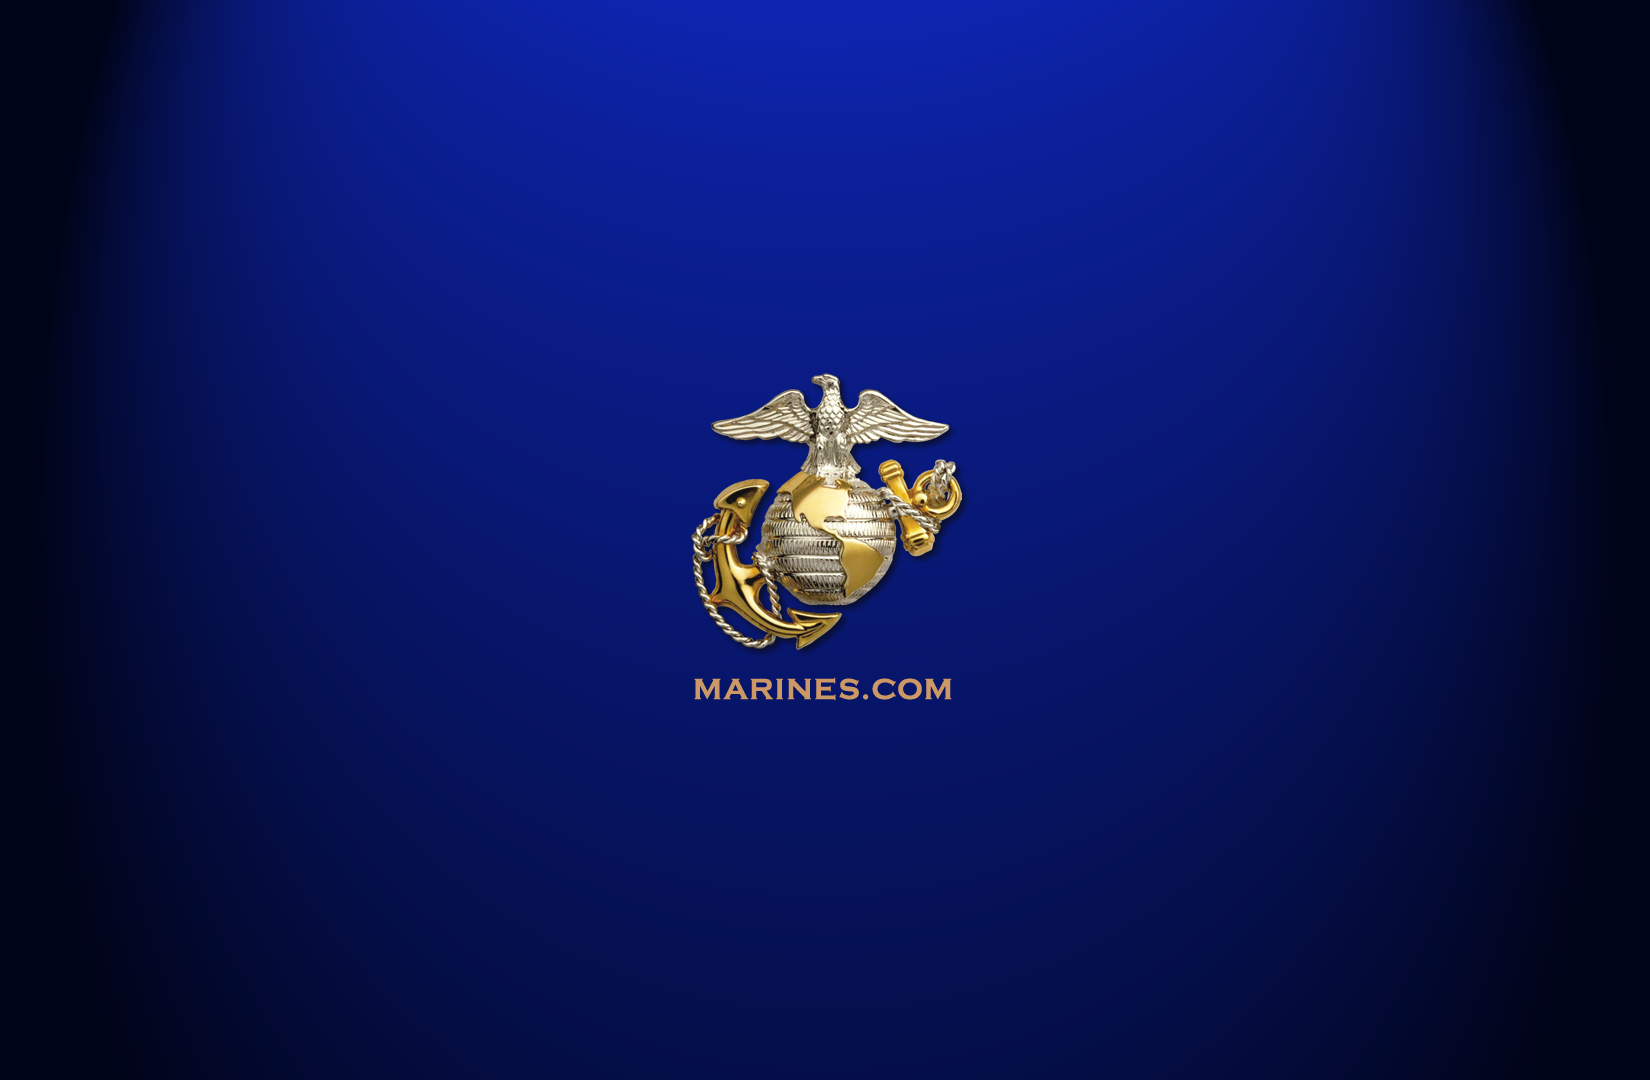 Marines Logo Wallpaper Camo Usmc 3 bn blue lima co by